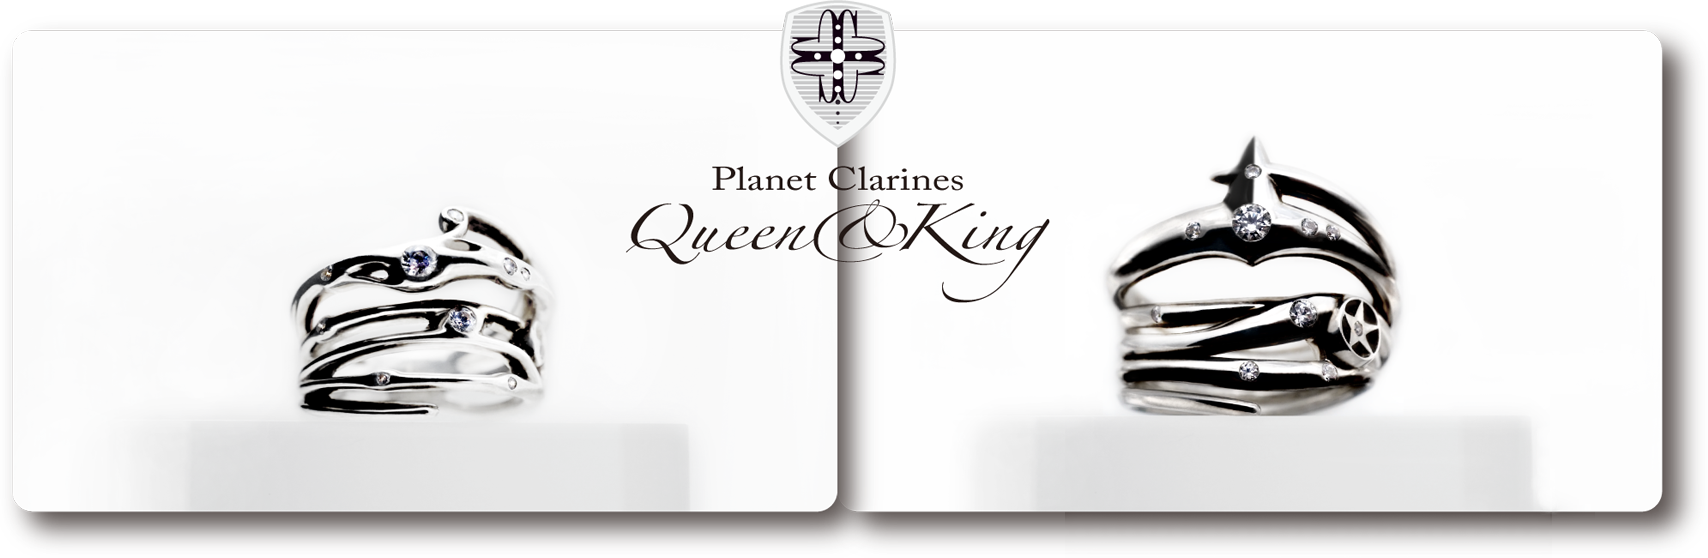 Planet Clarines Queen&King